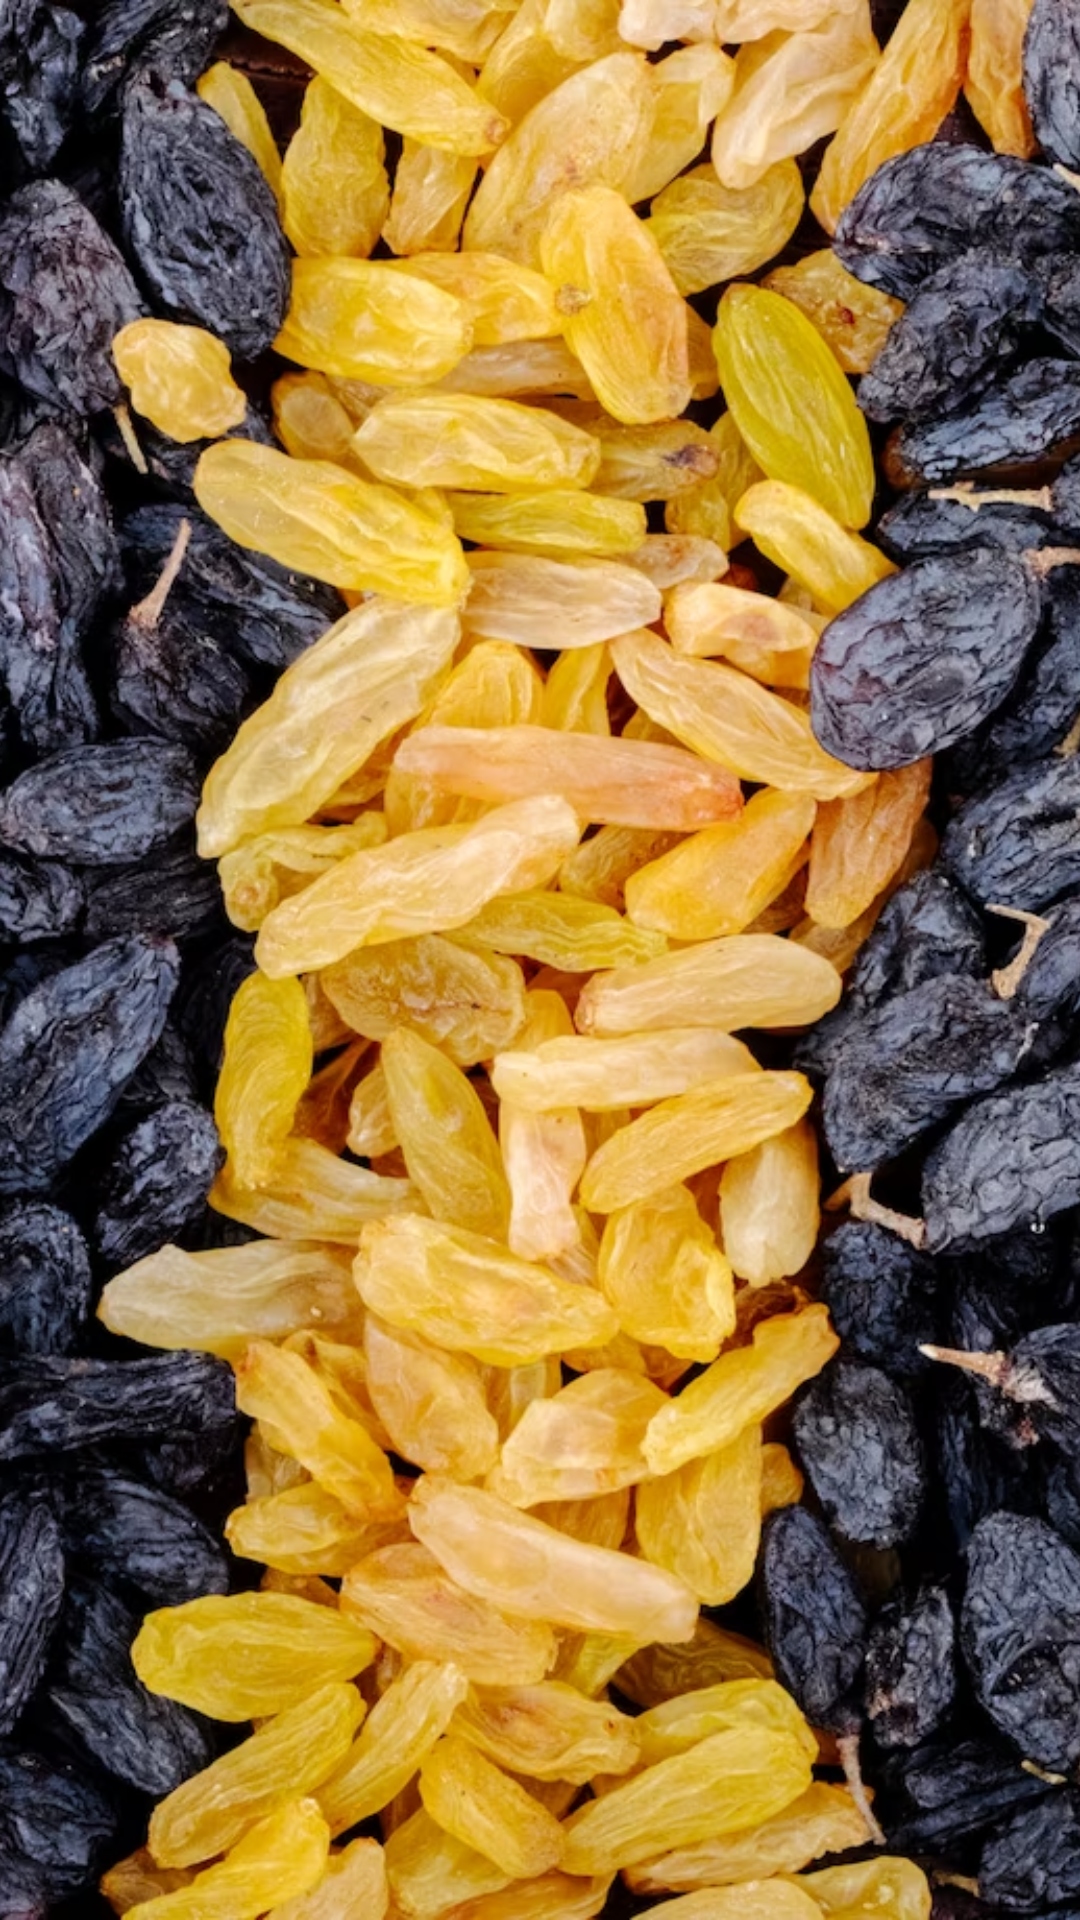 7 benefits of soaked raisins